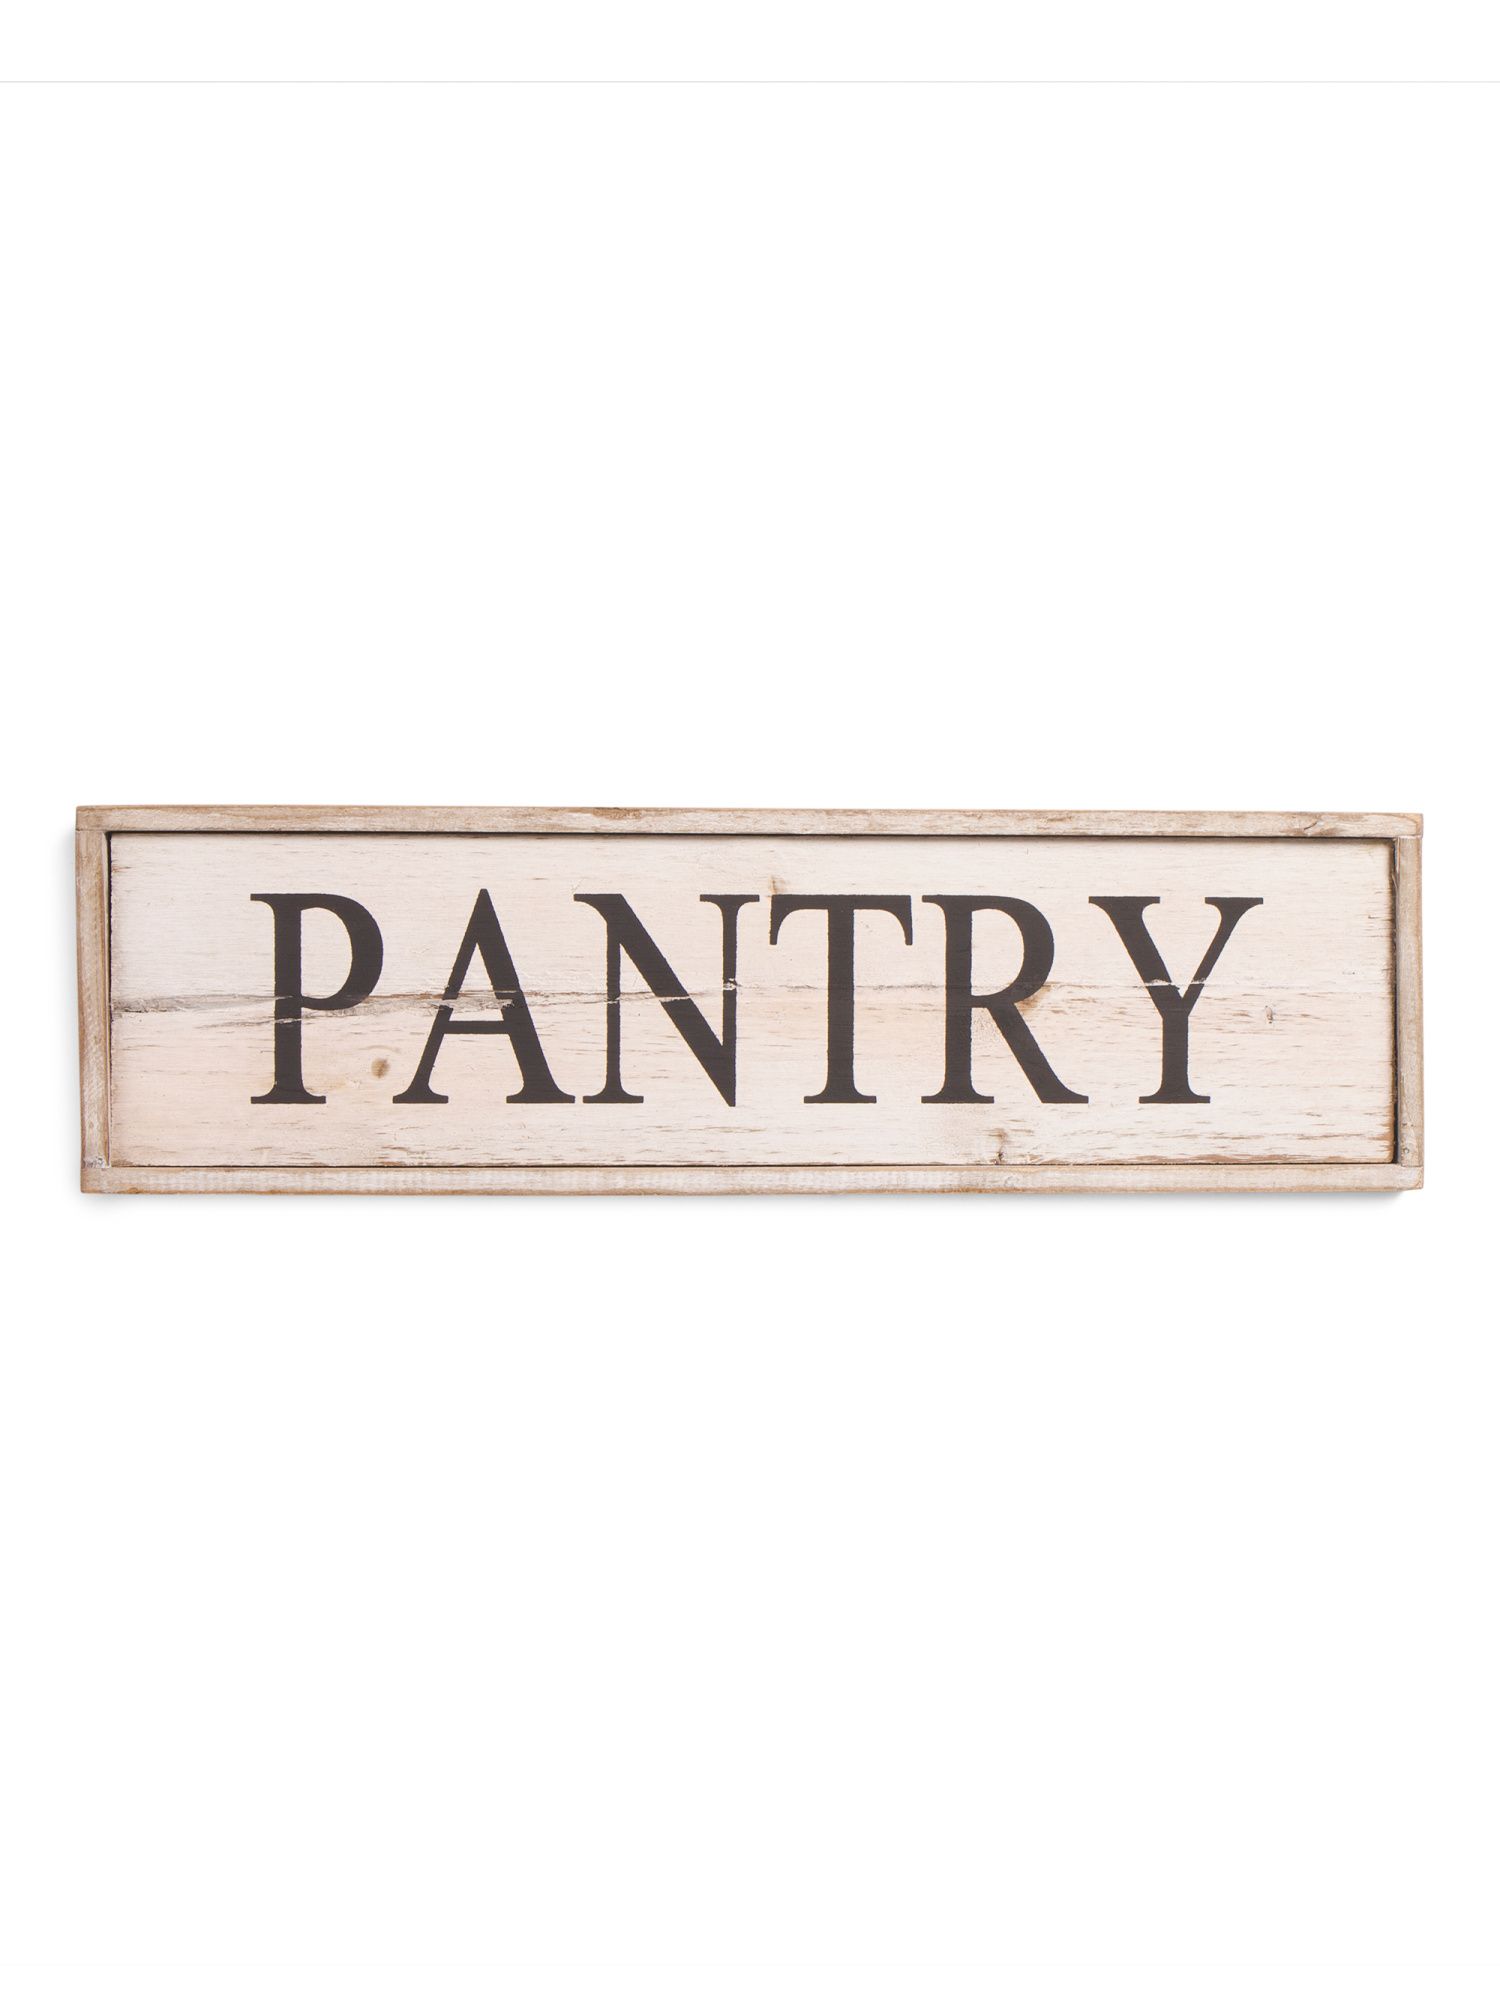 Pantry Wall Sign | TJ Maxx